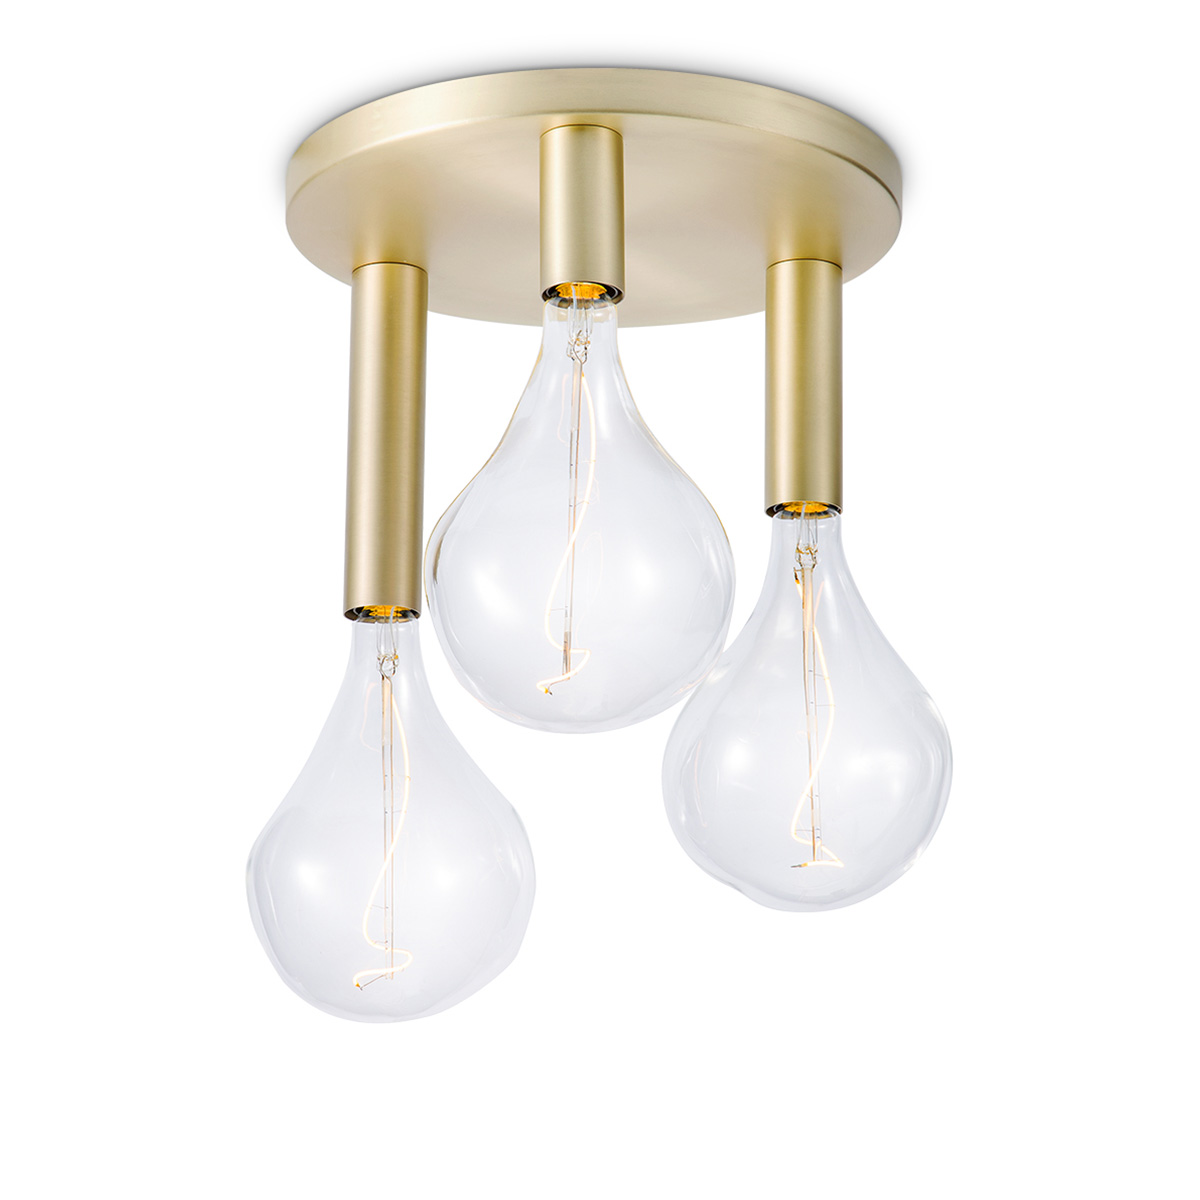 Tangla lighting - TLC5008-03BS - LED ceiling lamp 3 Lights - metal in brass - drop round - E27